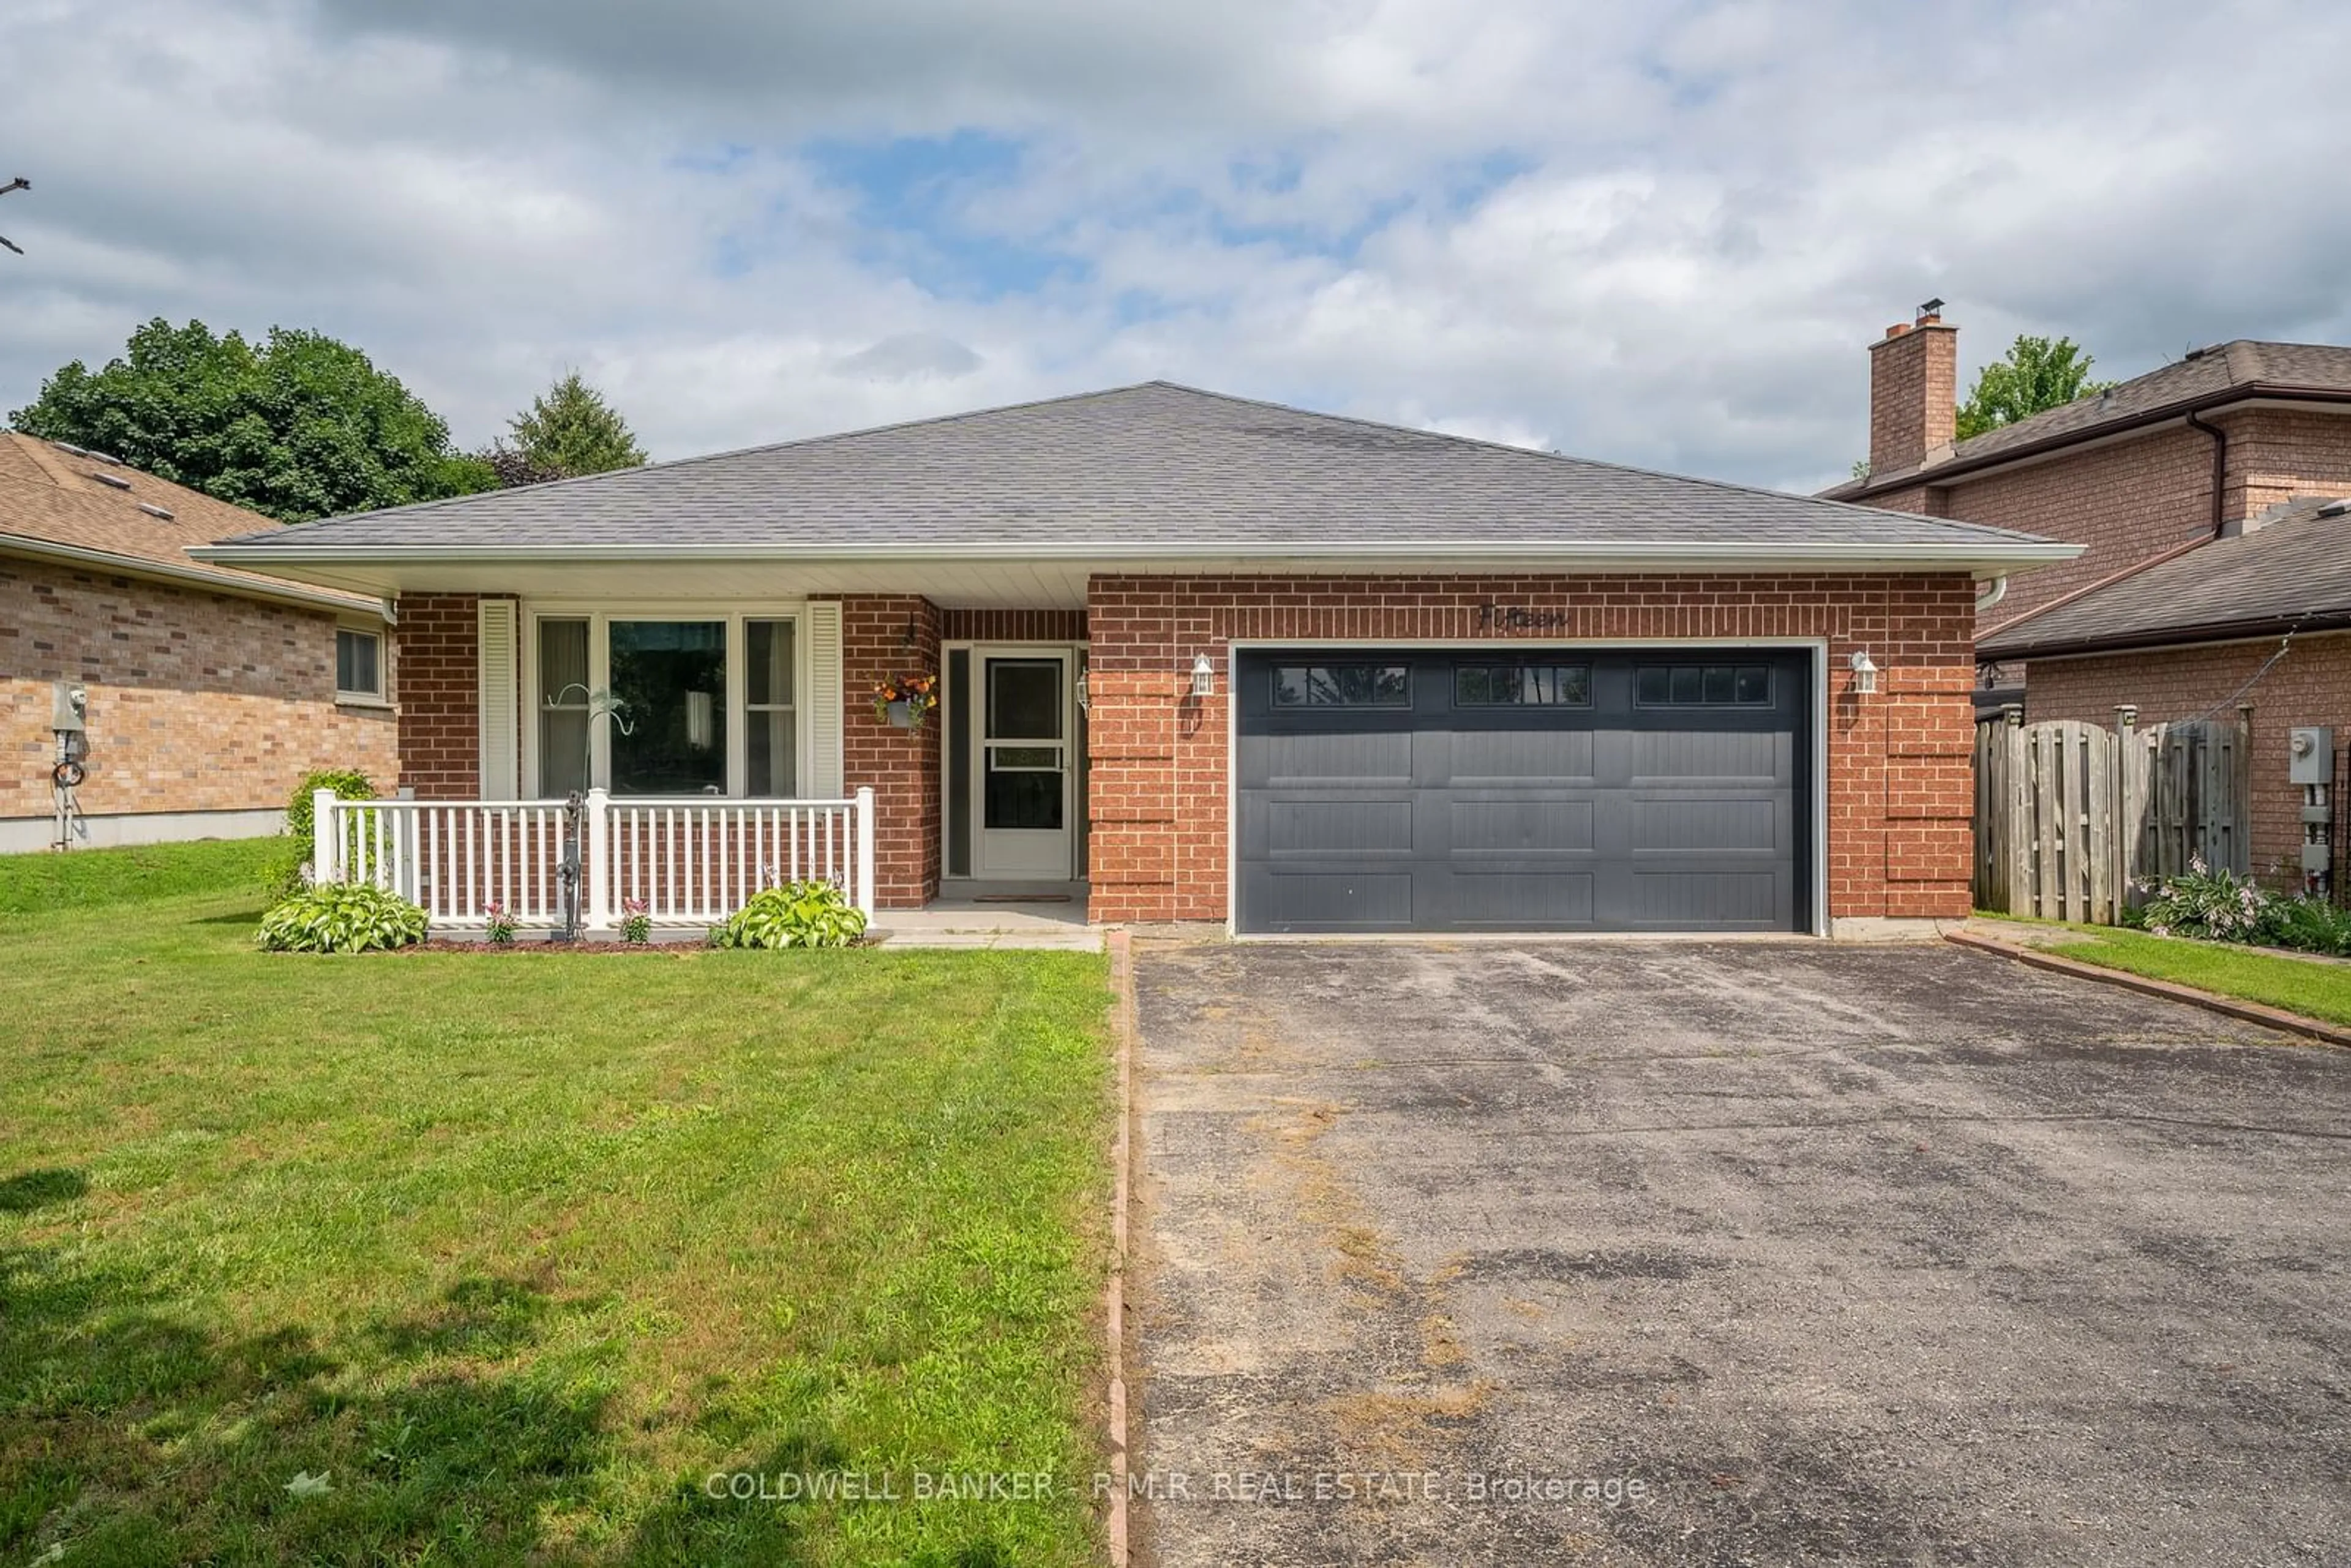 Home with brick exterior material for 15 Testa Rd, Uxbridge Ontario L9P 1M1